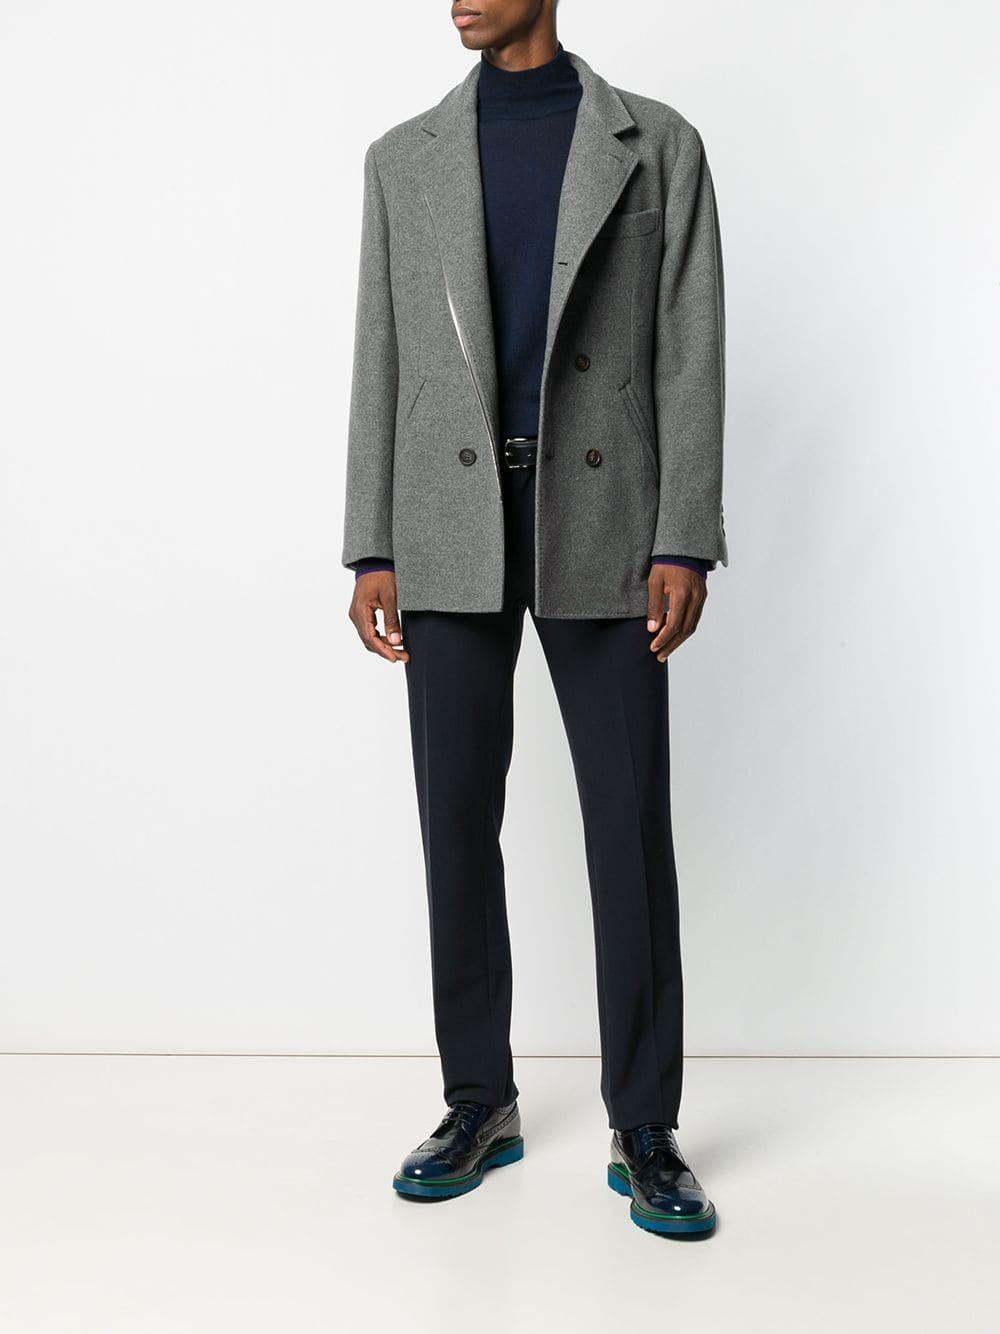 Brunello Cucinelli Cashmere Classic Pea Coat in Grey (Gray) for Men - Lyst